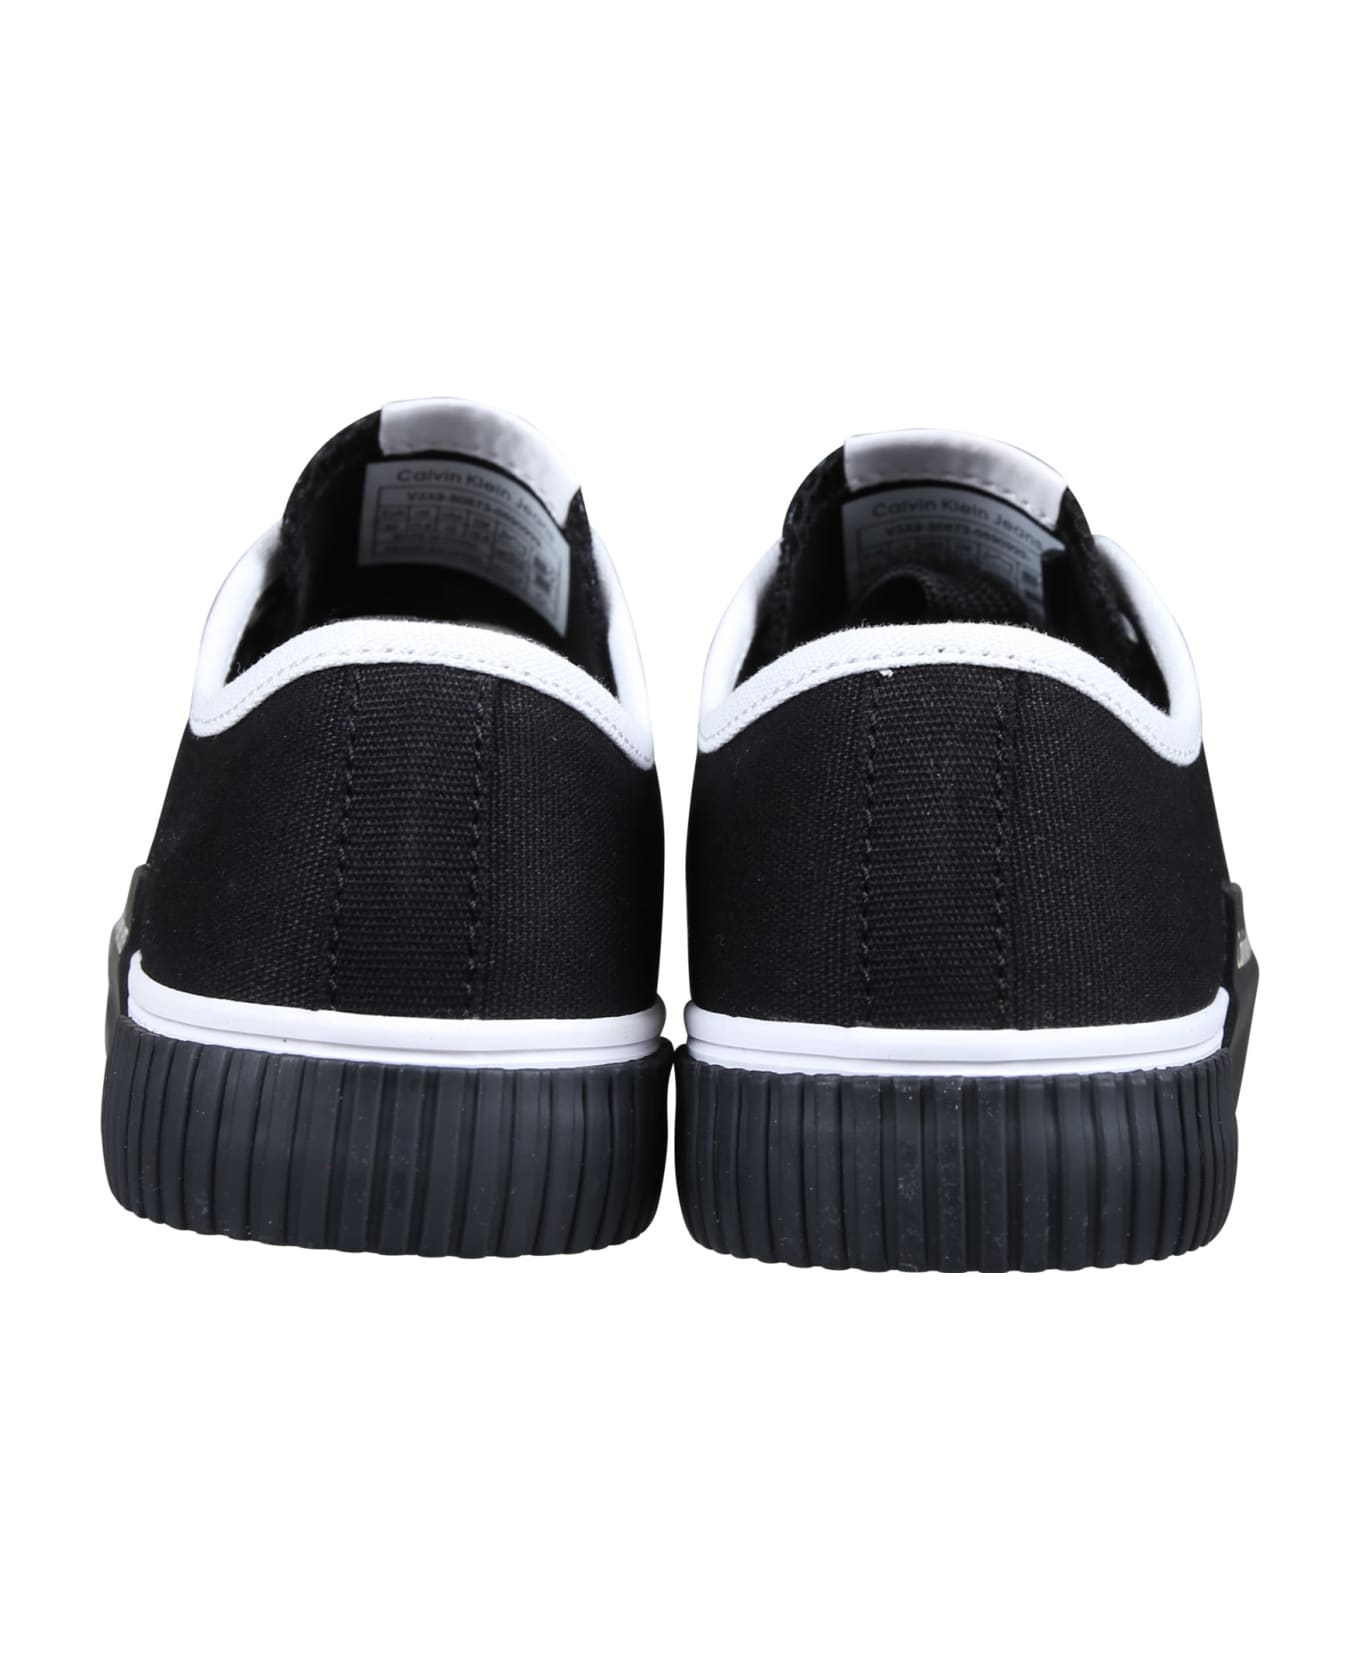 Calvin Klein Black Sneakers For Kids With Logo - Black シューズ